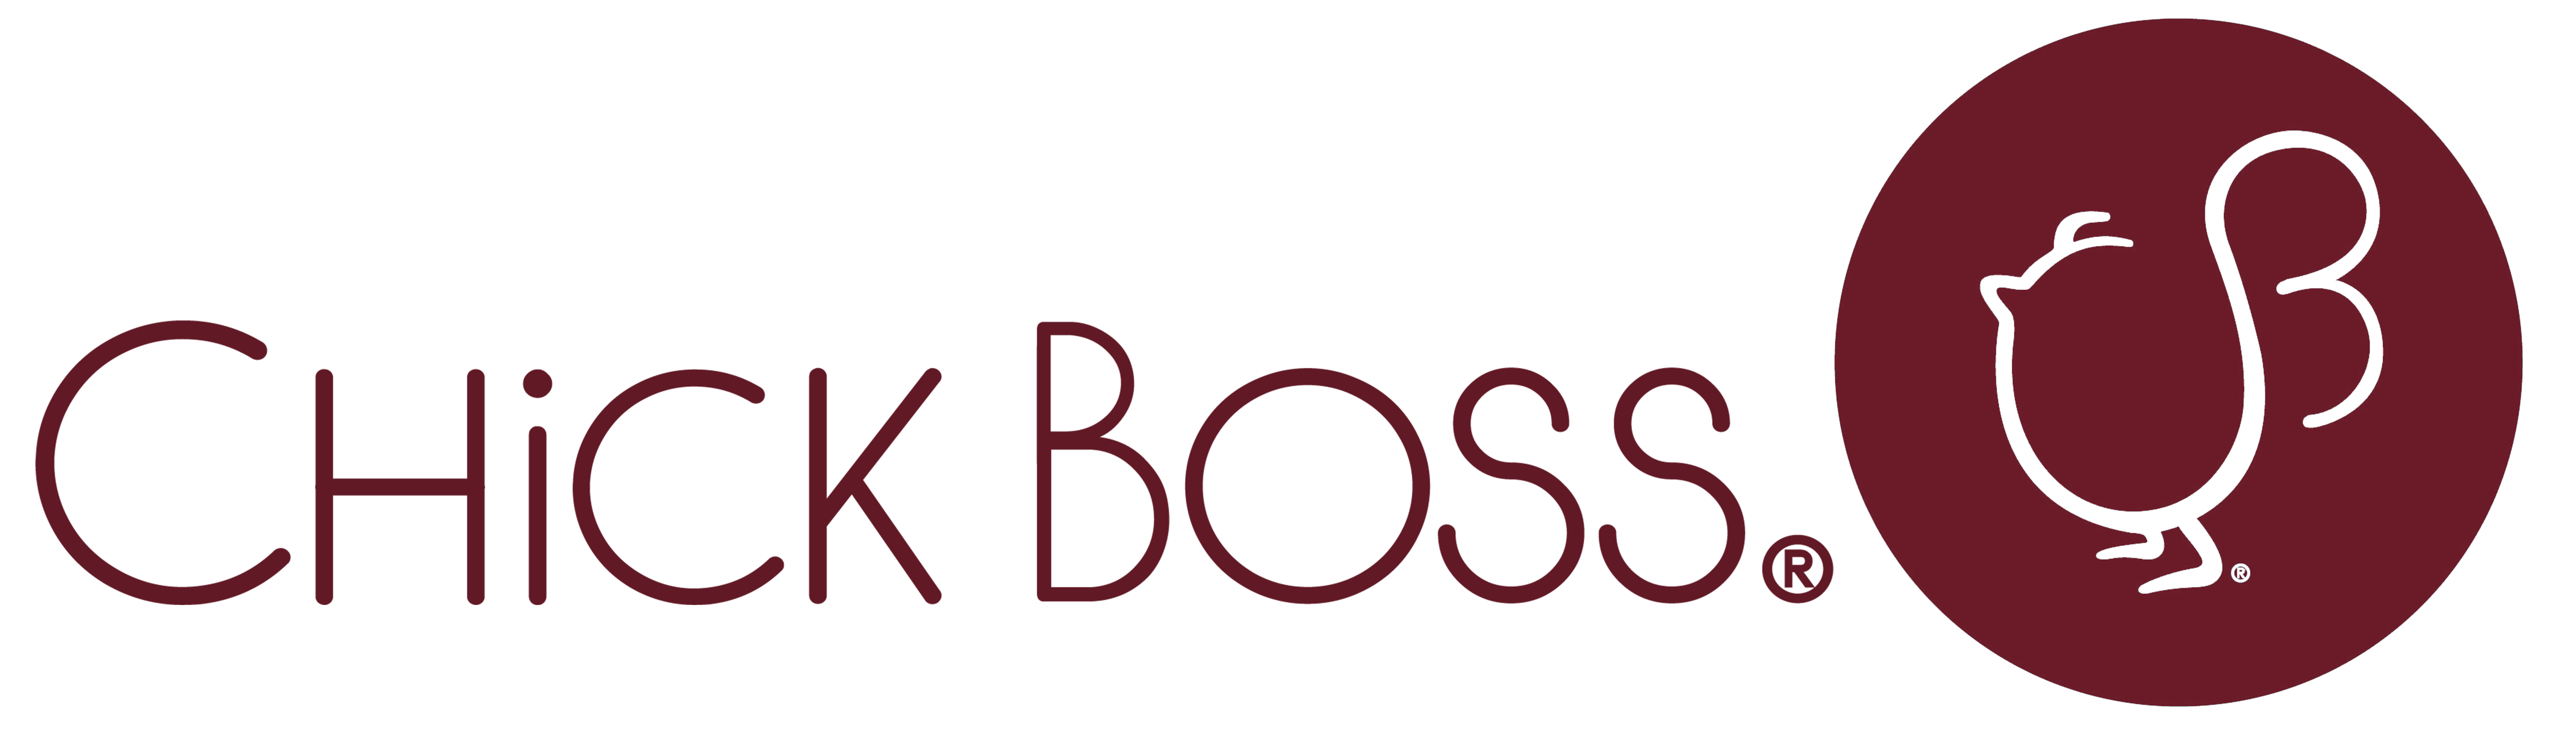 Chick Boss, LLC logo